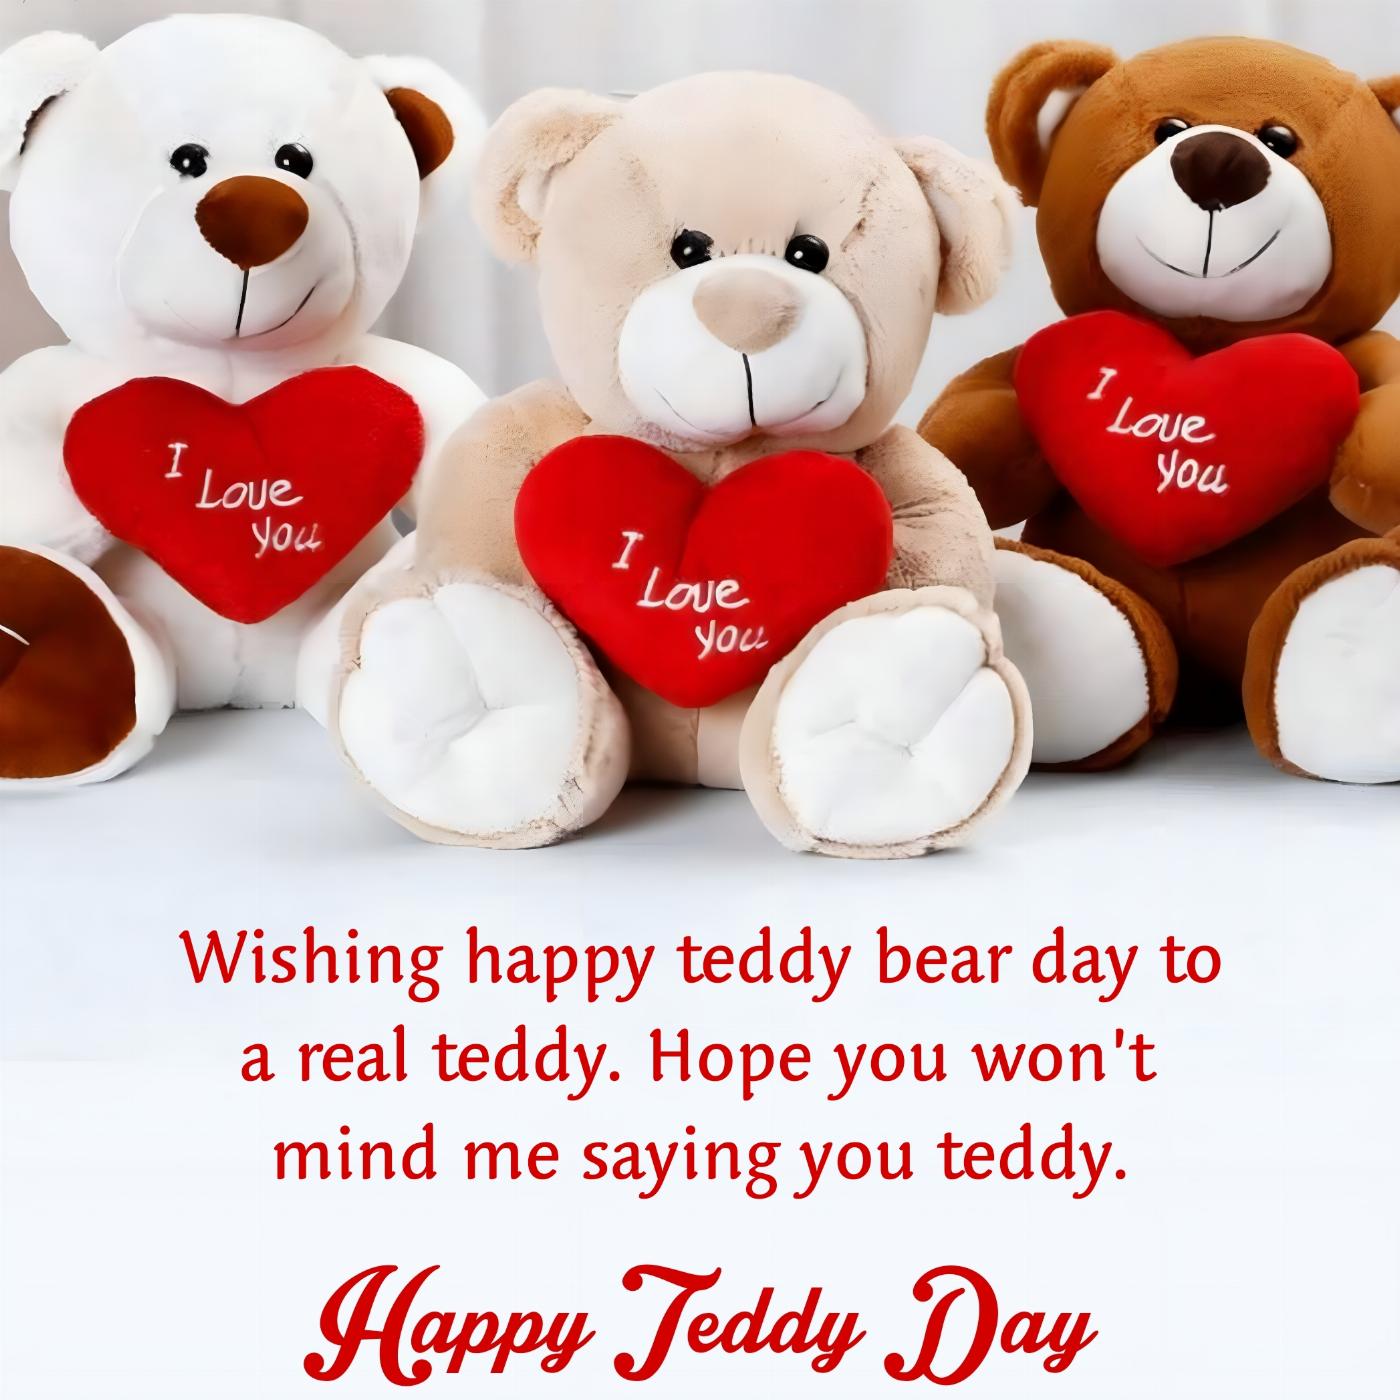 Wishing happy teddy bear day to a real teddy